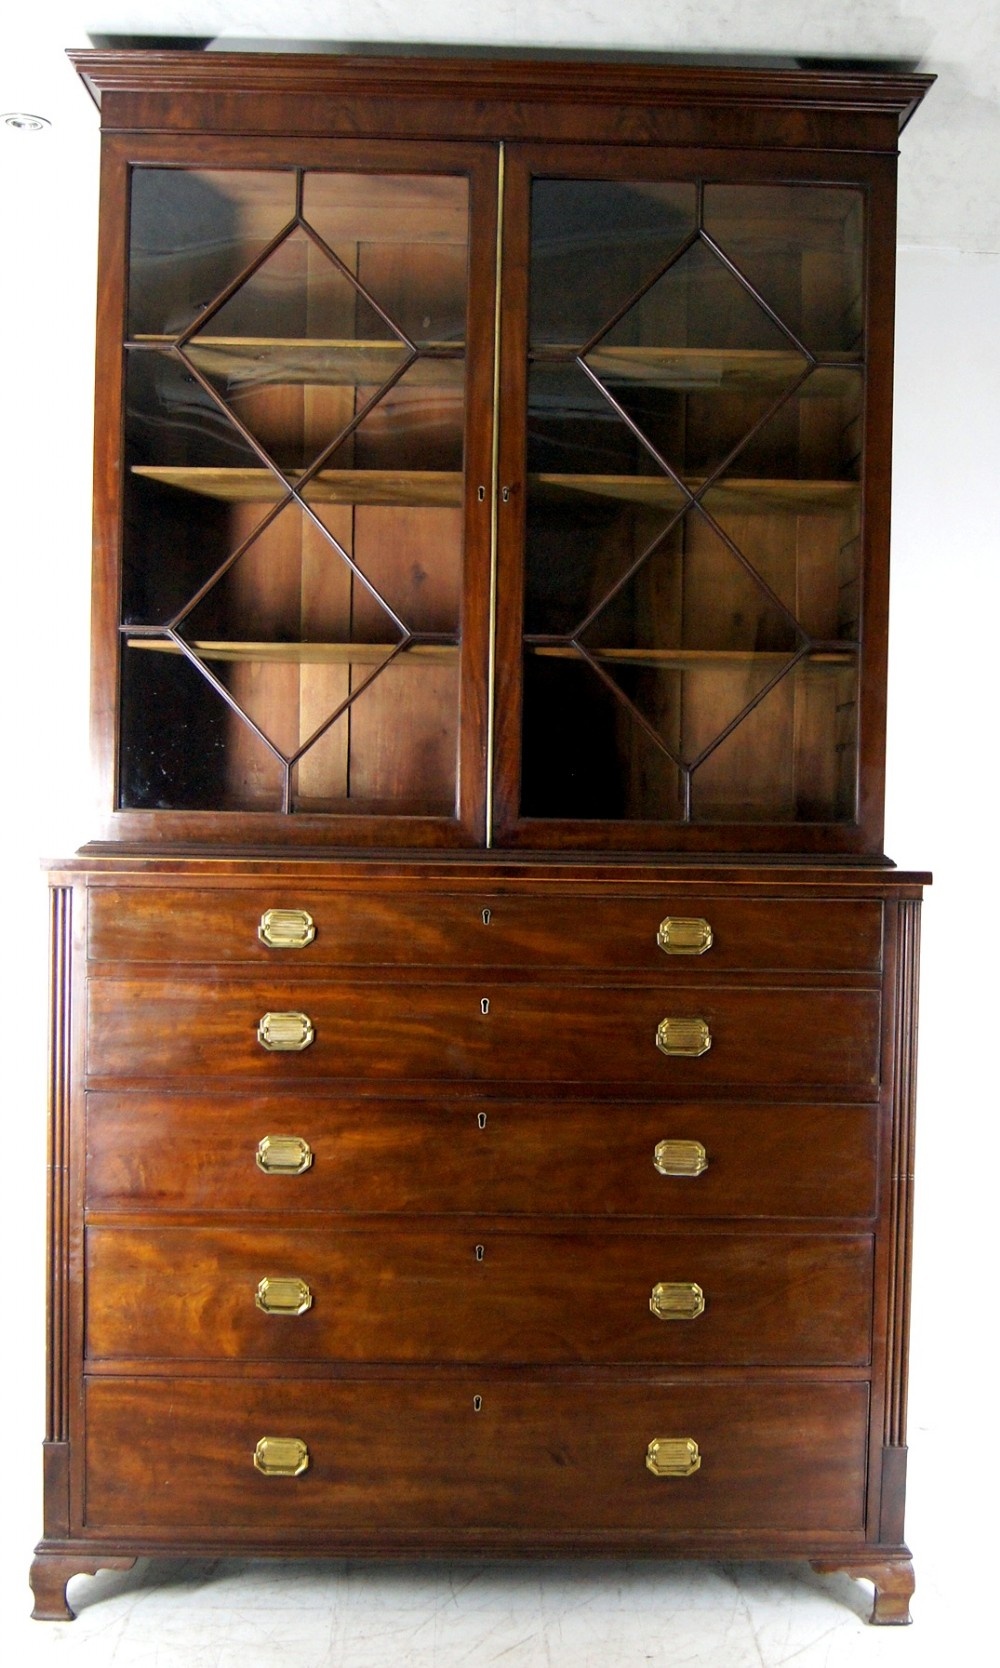 a very impressive late georgian mahogany secretaire bookcase